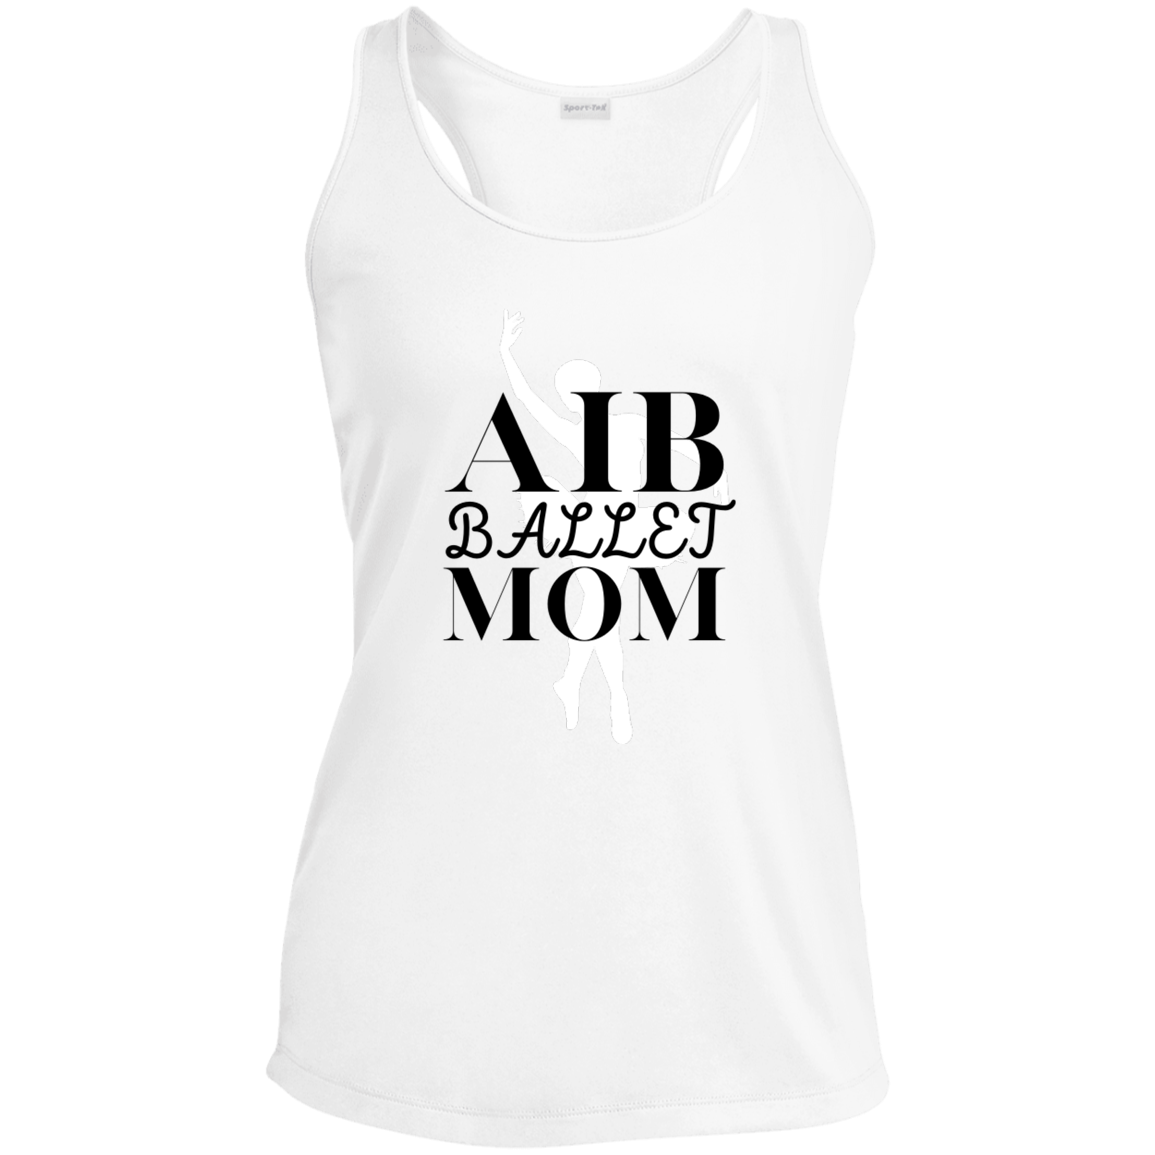 AIB Ballet Mom- Ladies' Performance Racerback Tank